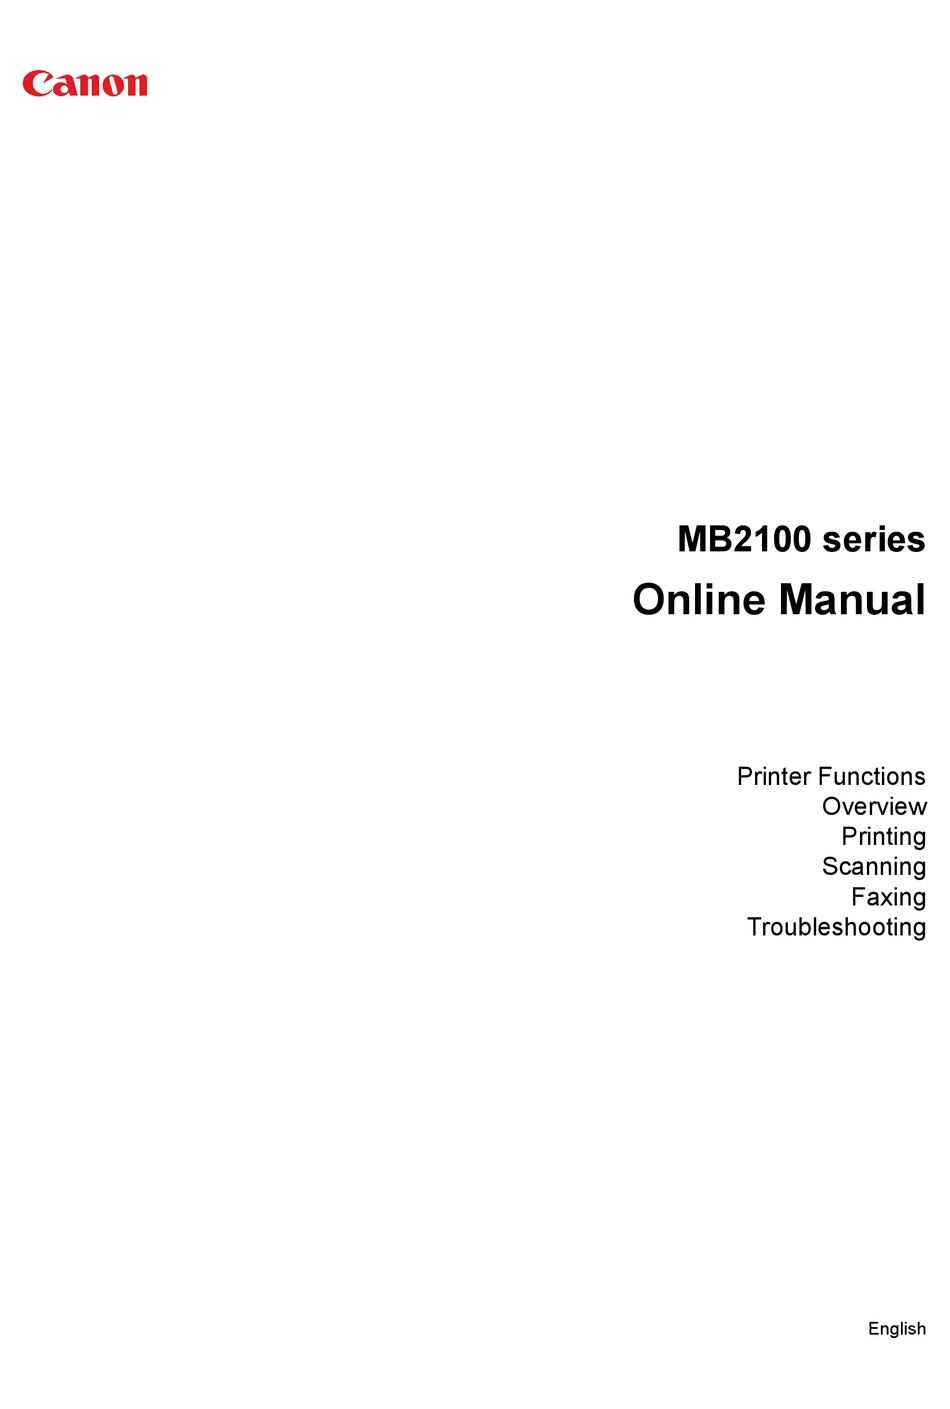 CANON MB2100 SERIES ONLINE MANUAL Pdf Download | ManualsLib